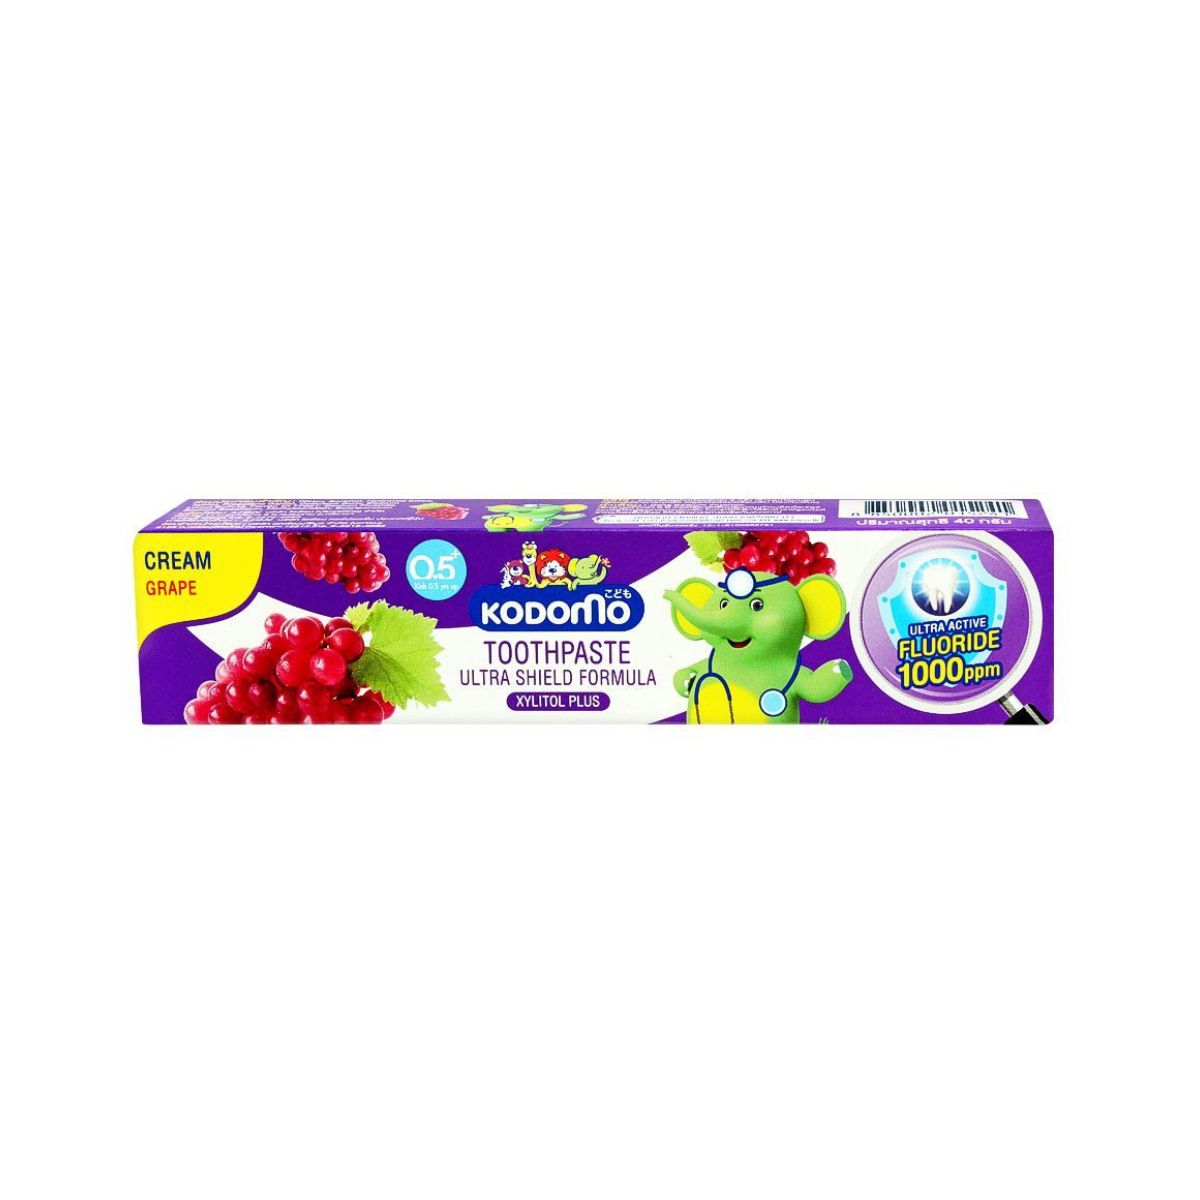 Kodomo Toothpaste Ultra Shield Formula - Xylitol Plus - Cream Grape